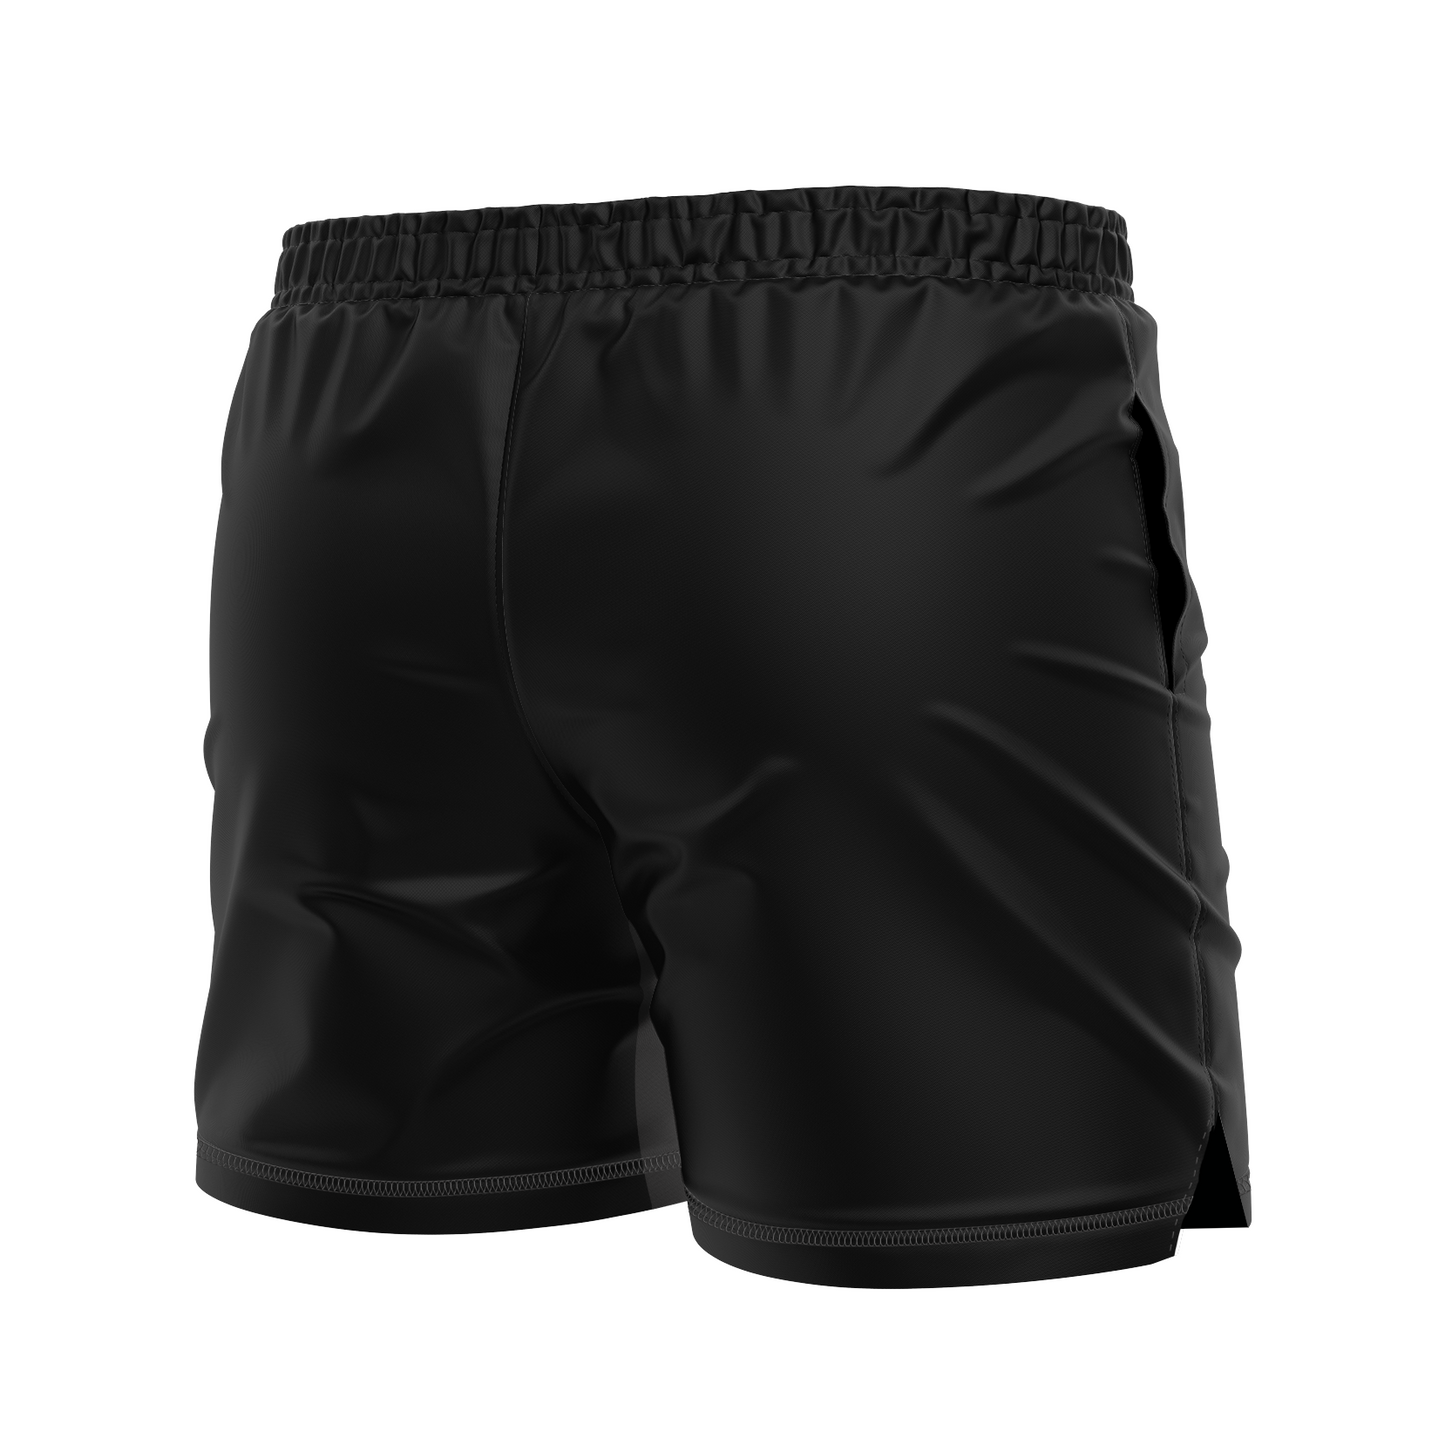 Death by Wristlock: Tokyo Six men's FC shorts, black